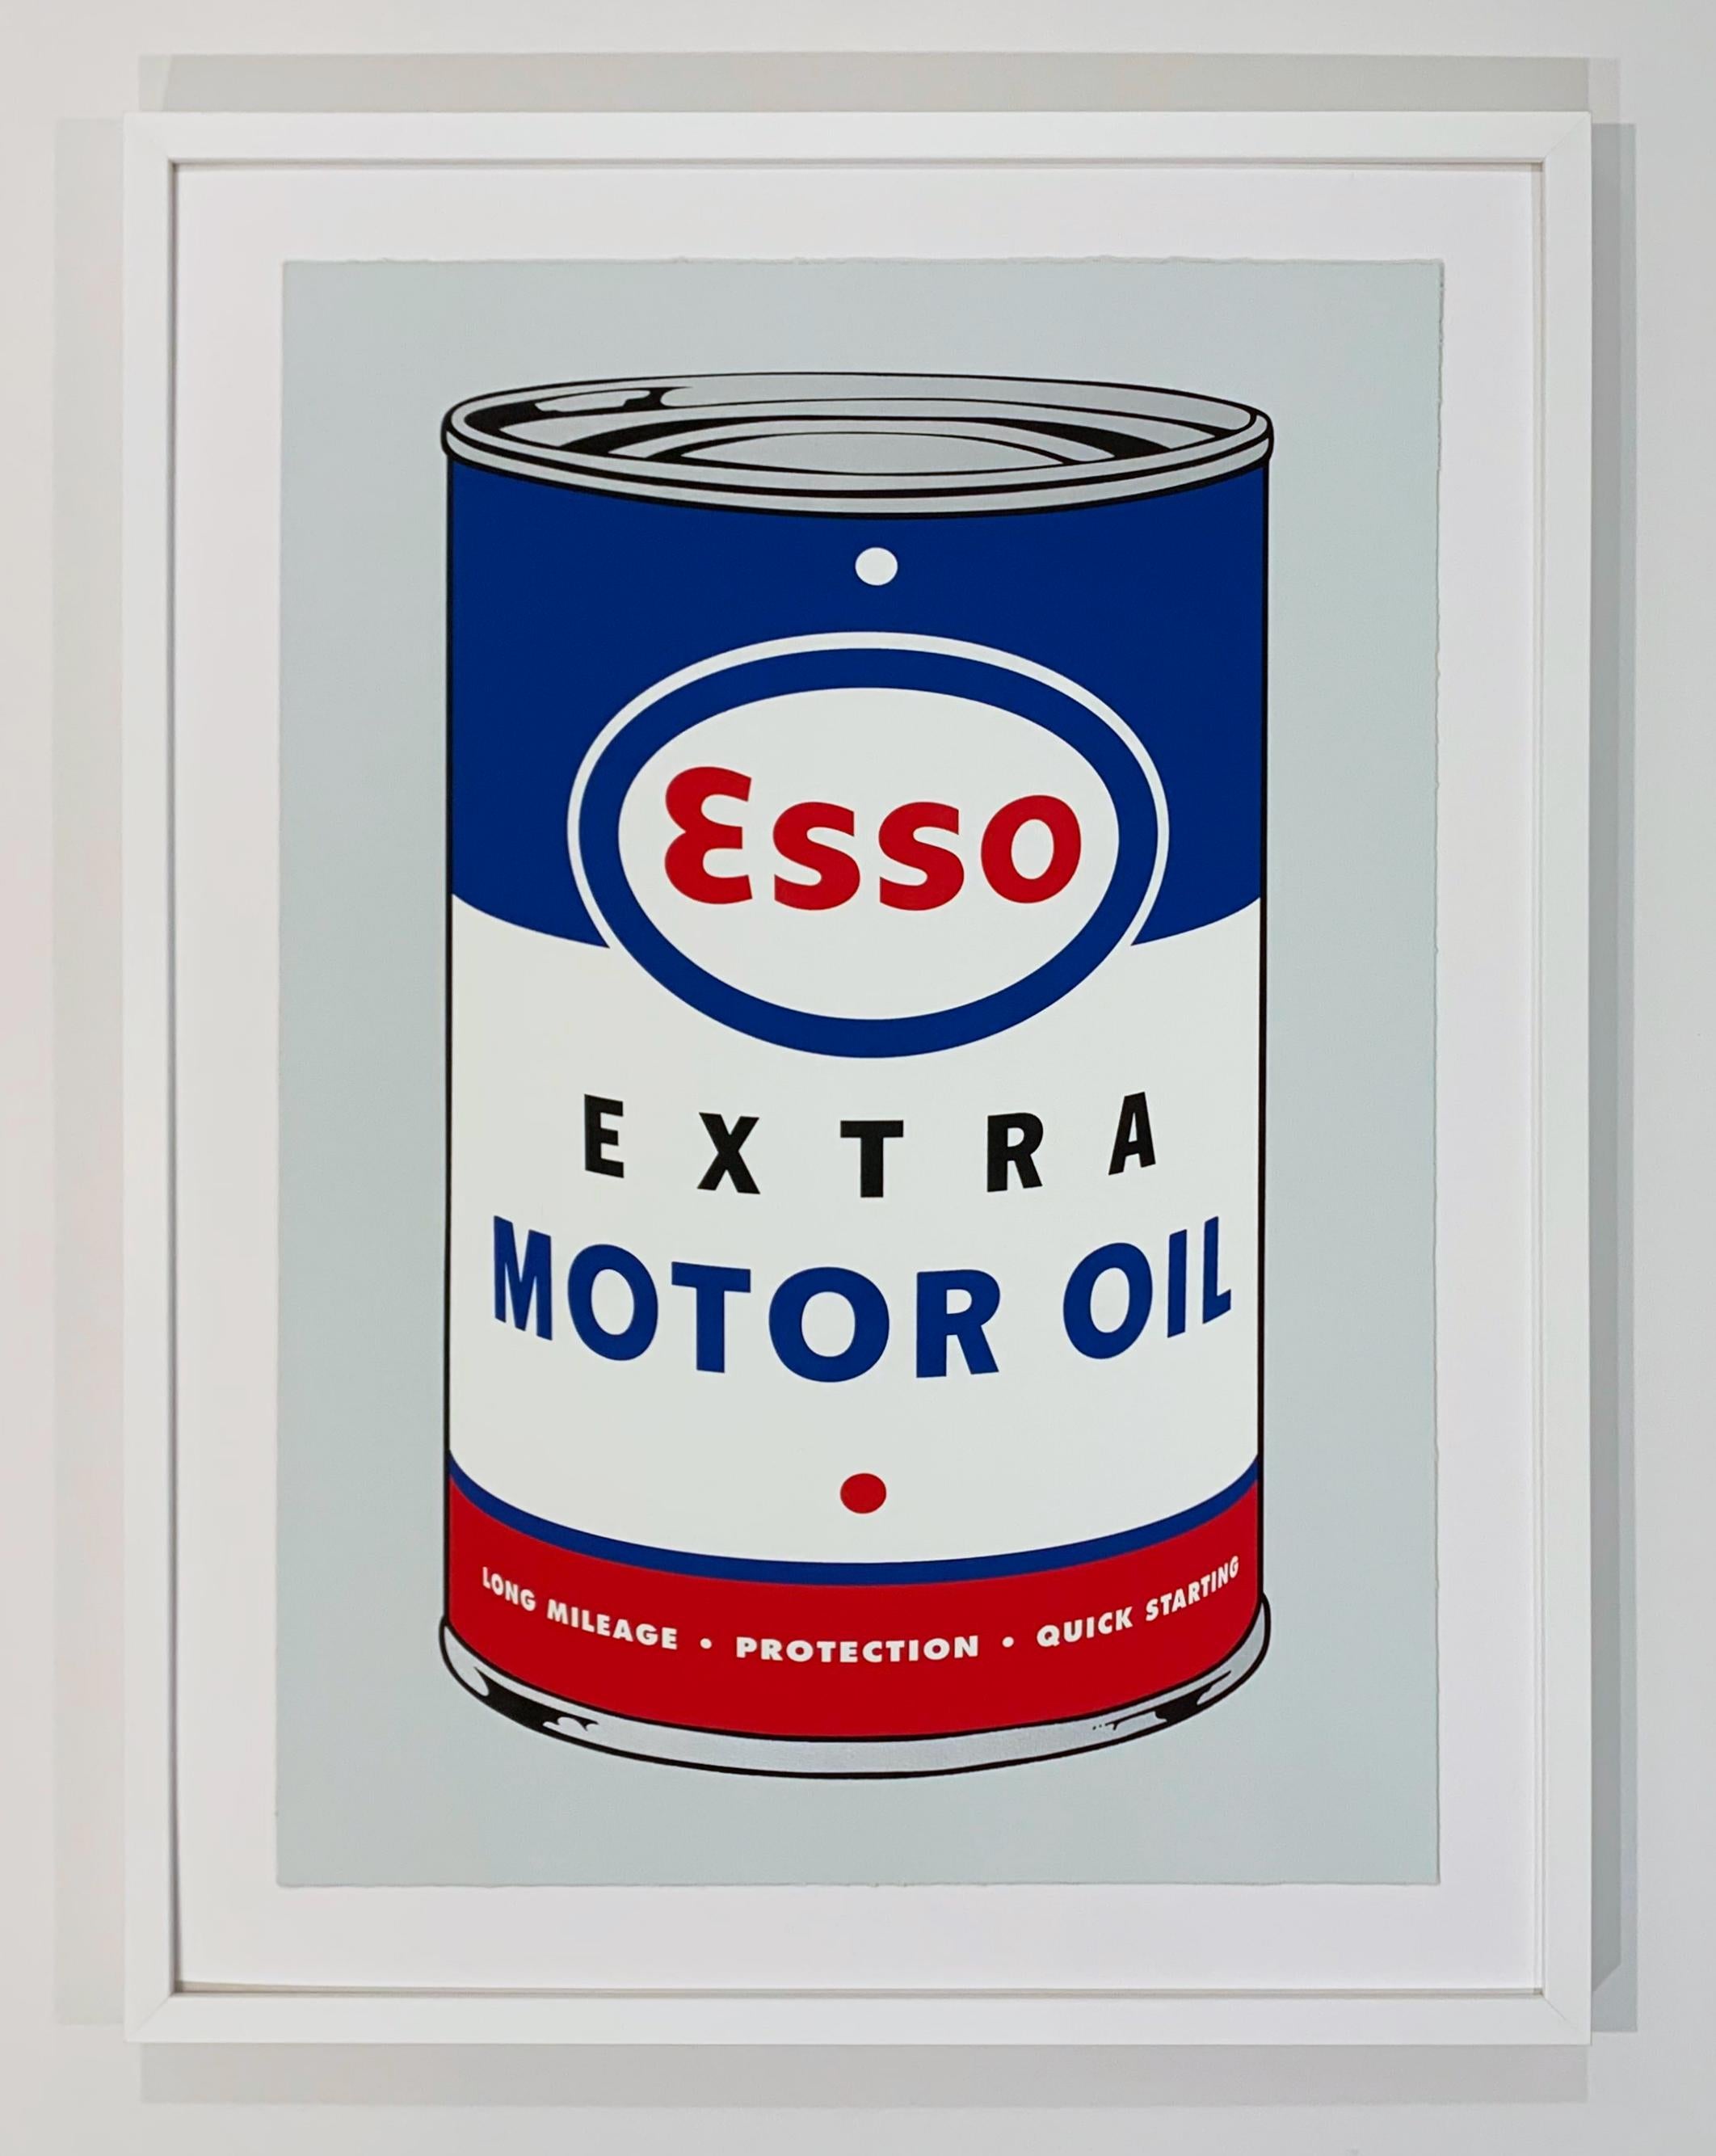 Masterpieces in Oils: Esso - Contemporary Print by Heiner Meyer